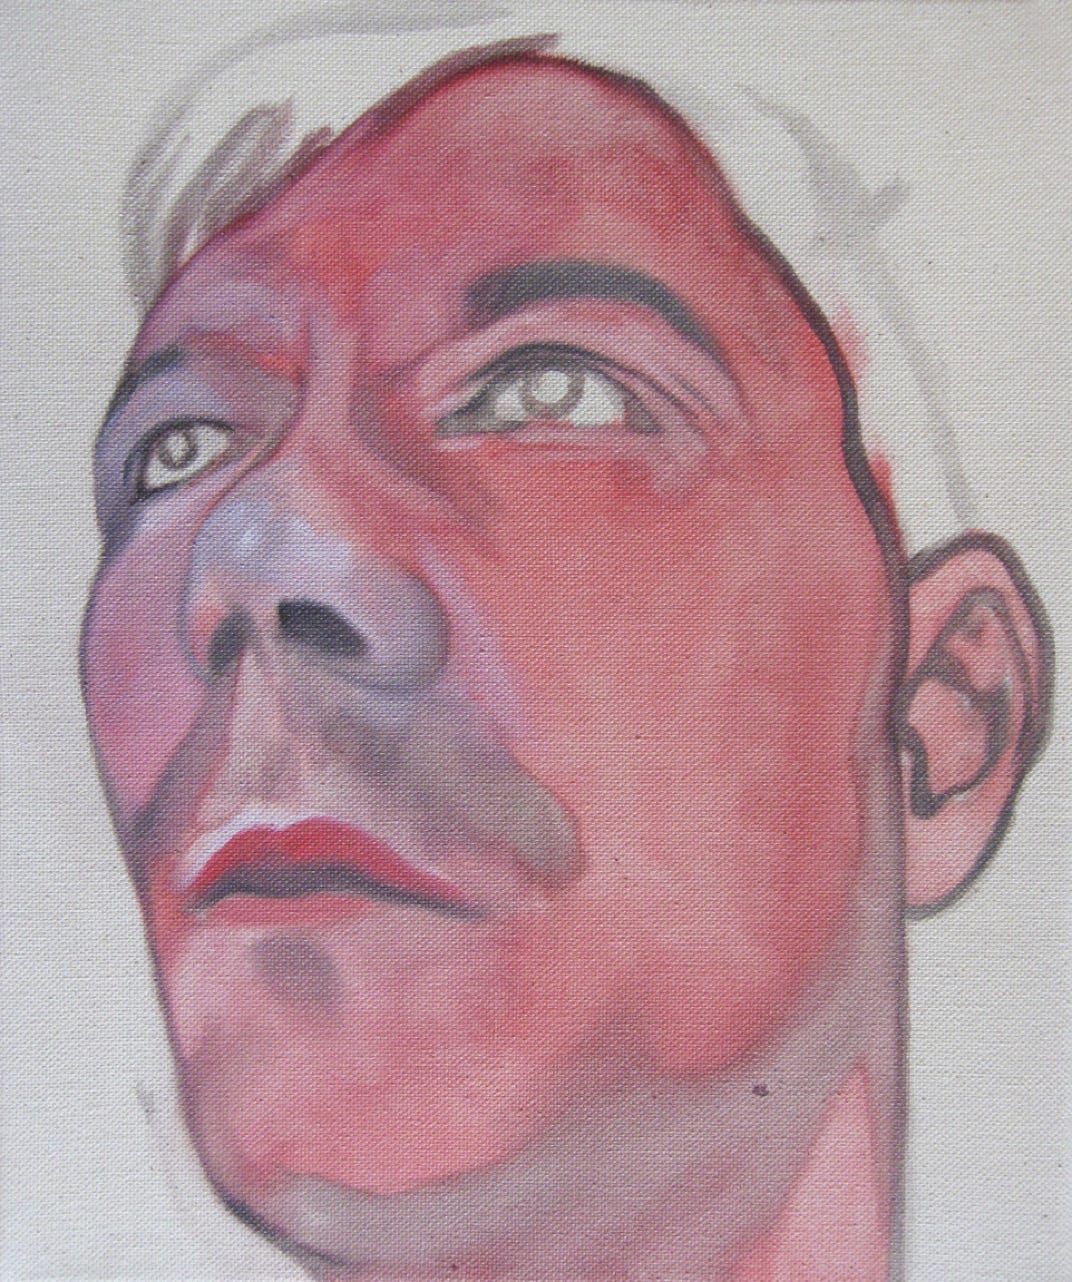 30x25 cm, oil on canvas, 2015